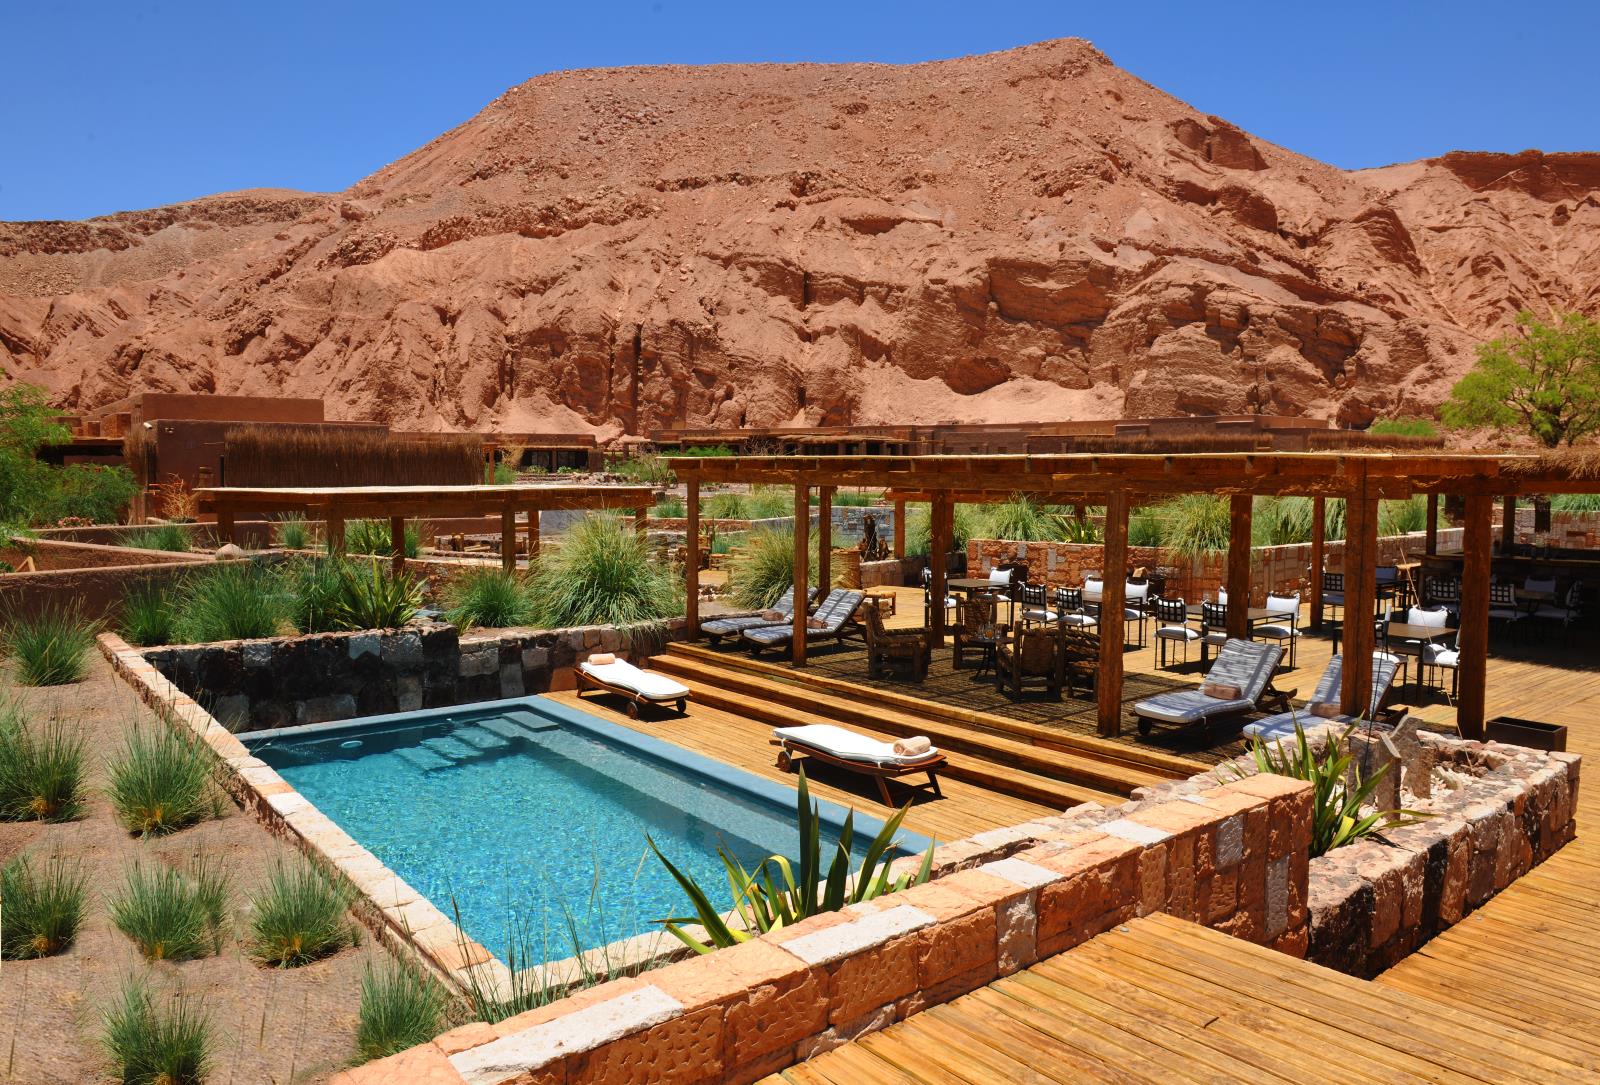 Pool area - Alto Atacama Desert Lodge & Spa